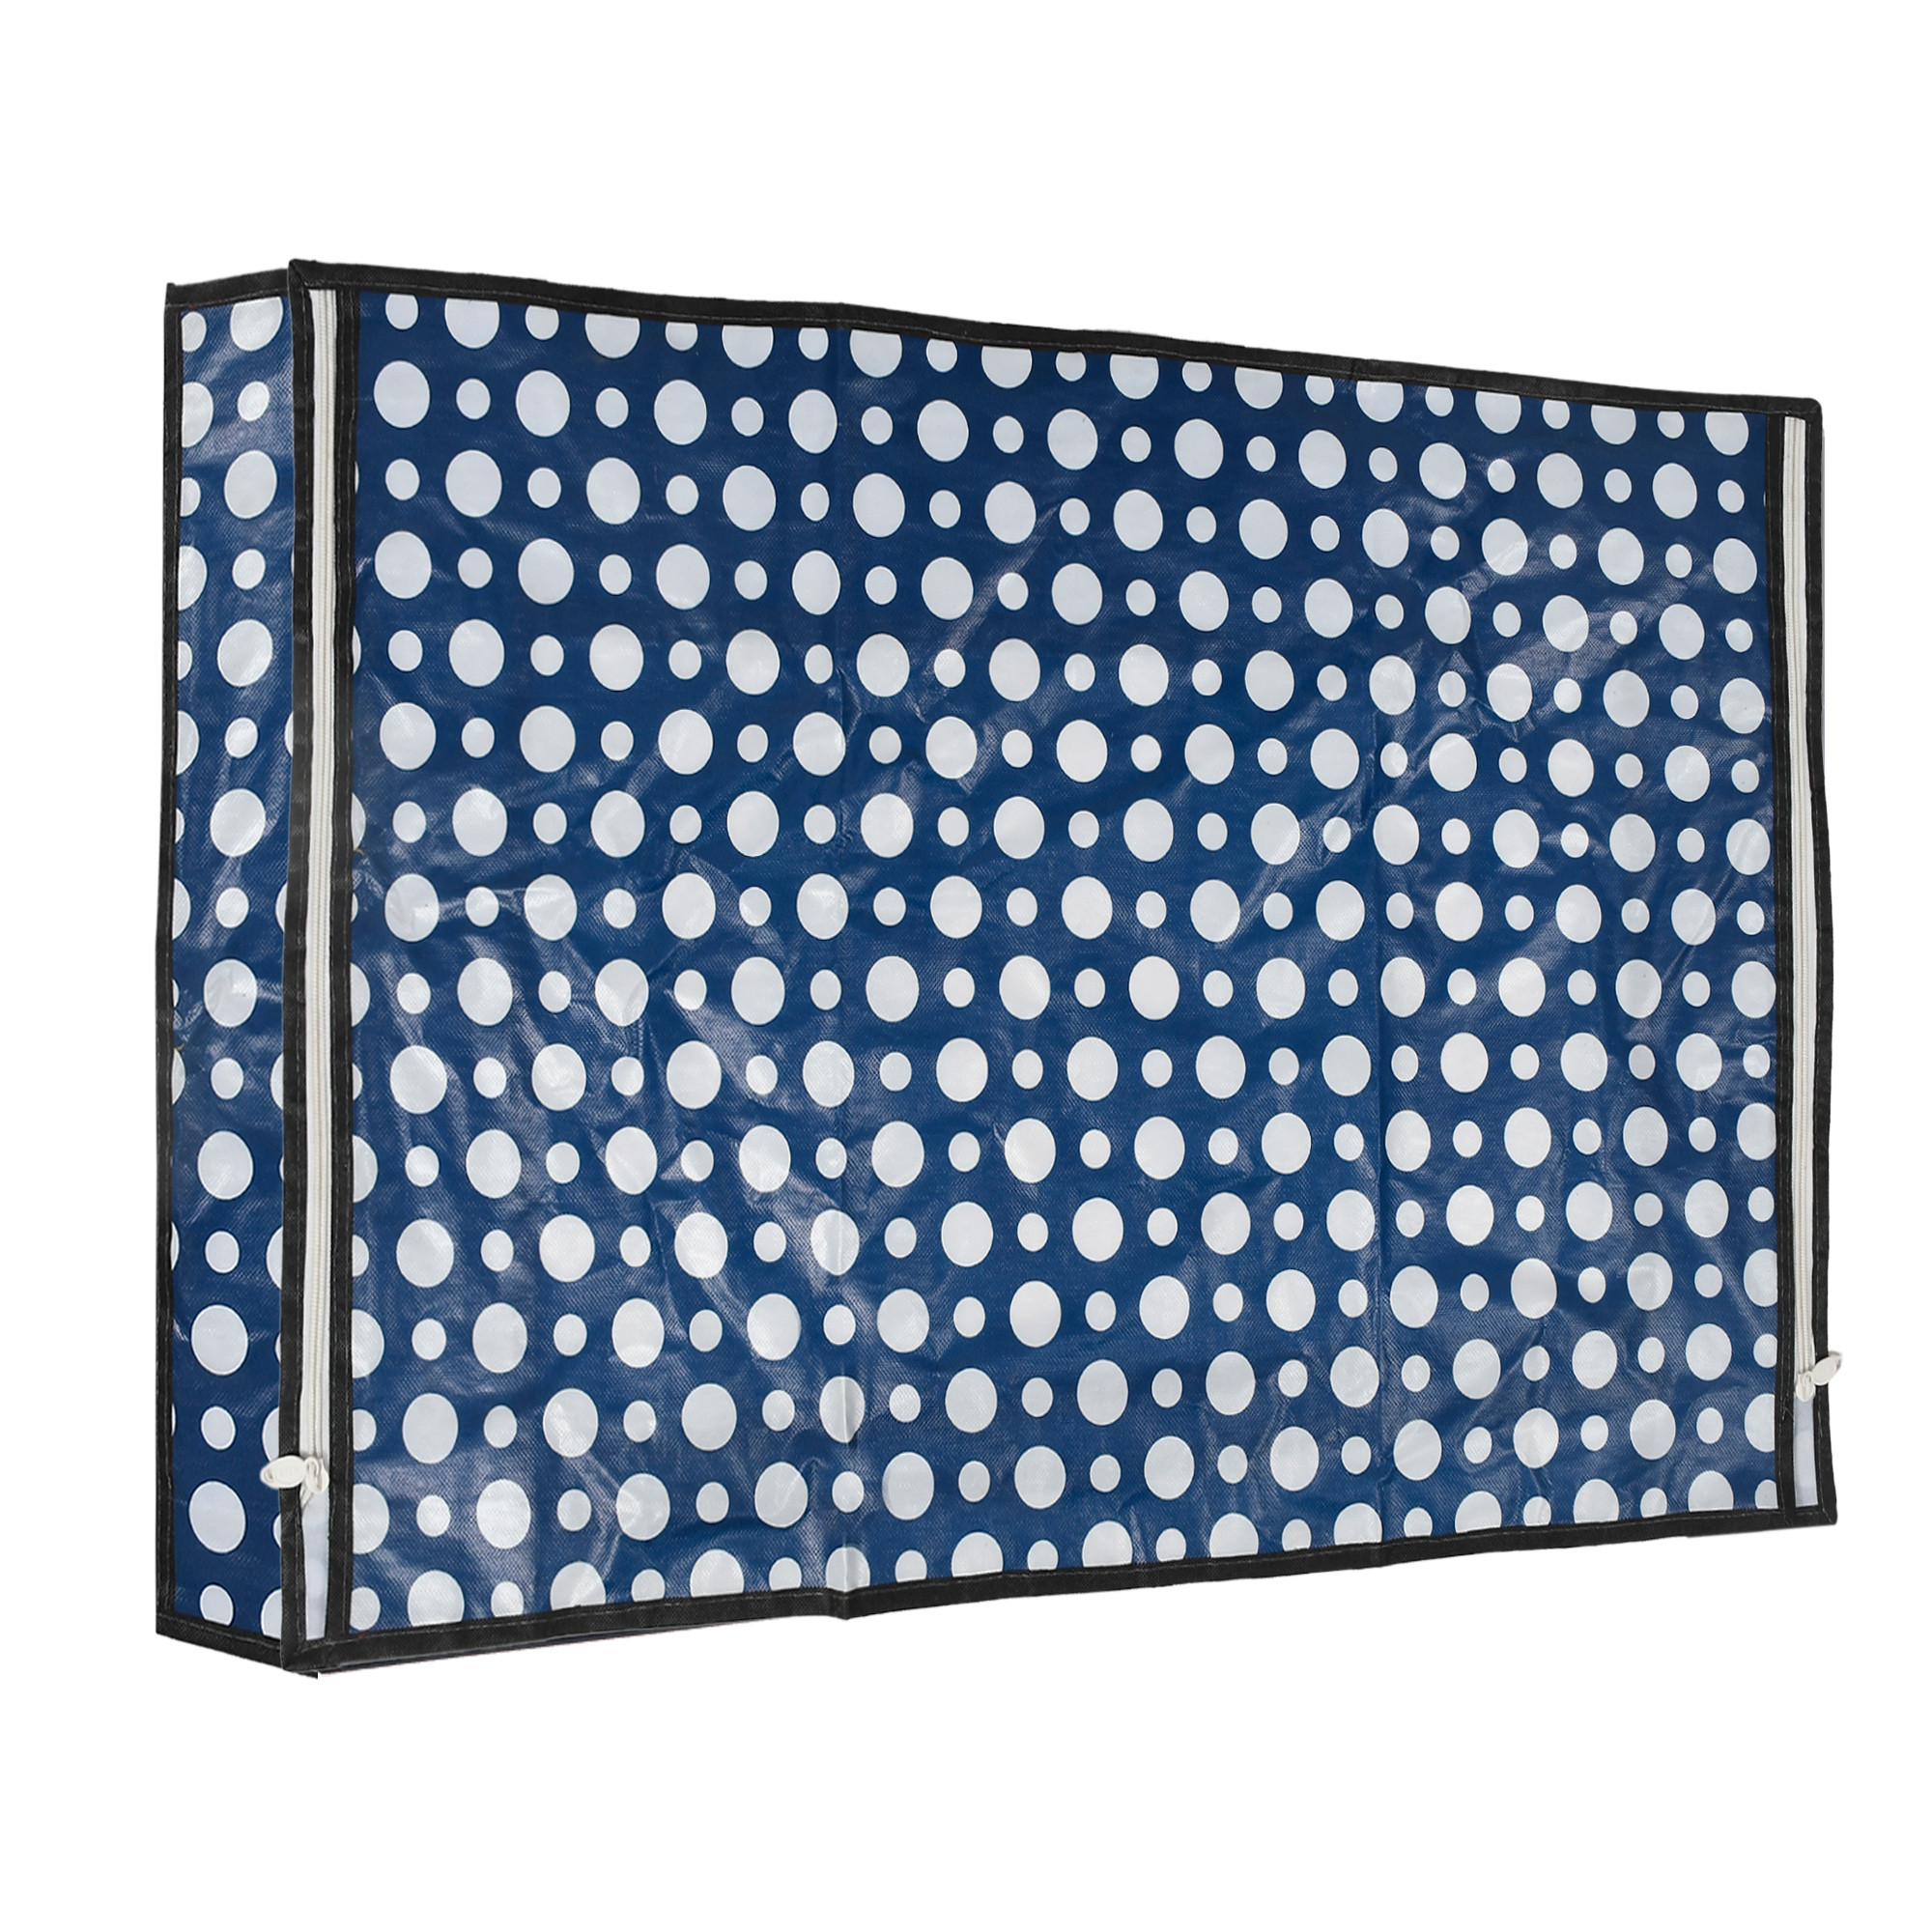 Kuber Industries PVC Dot Print Waterproof & Dustproof TV Cover, 32 Inch (Blue) 54KM4289